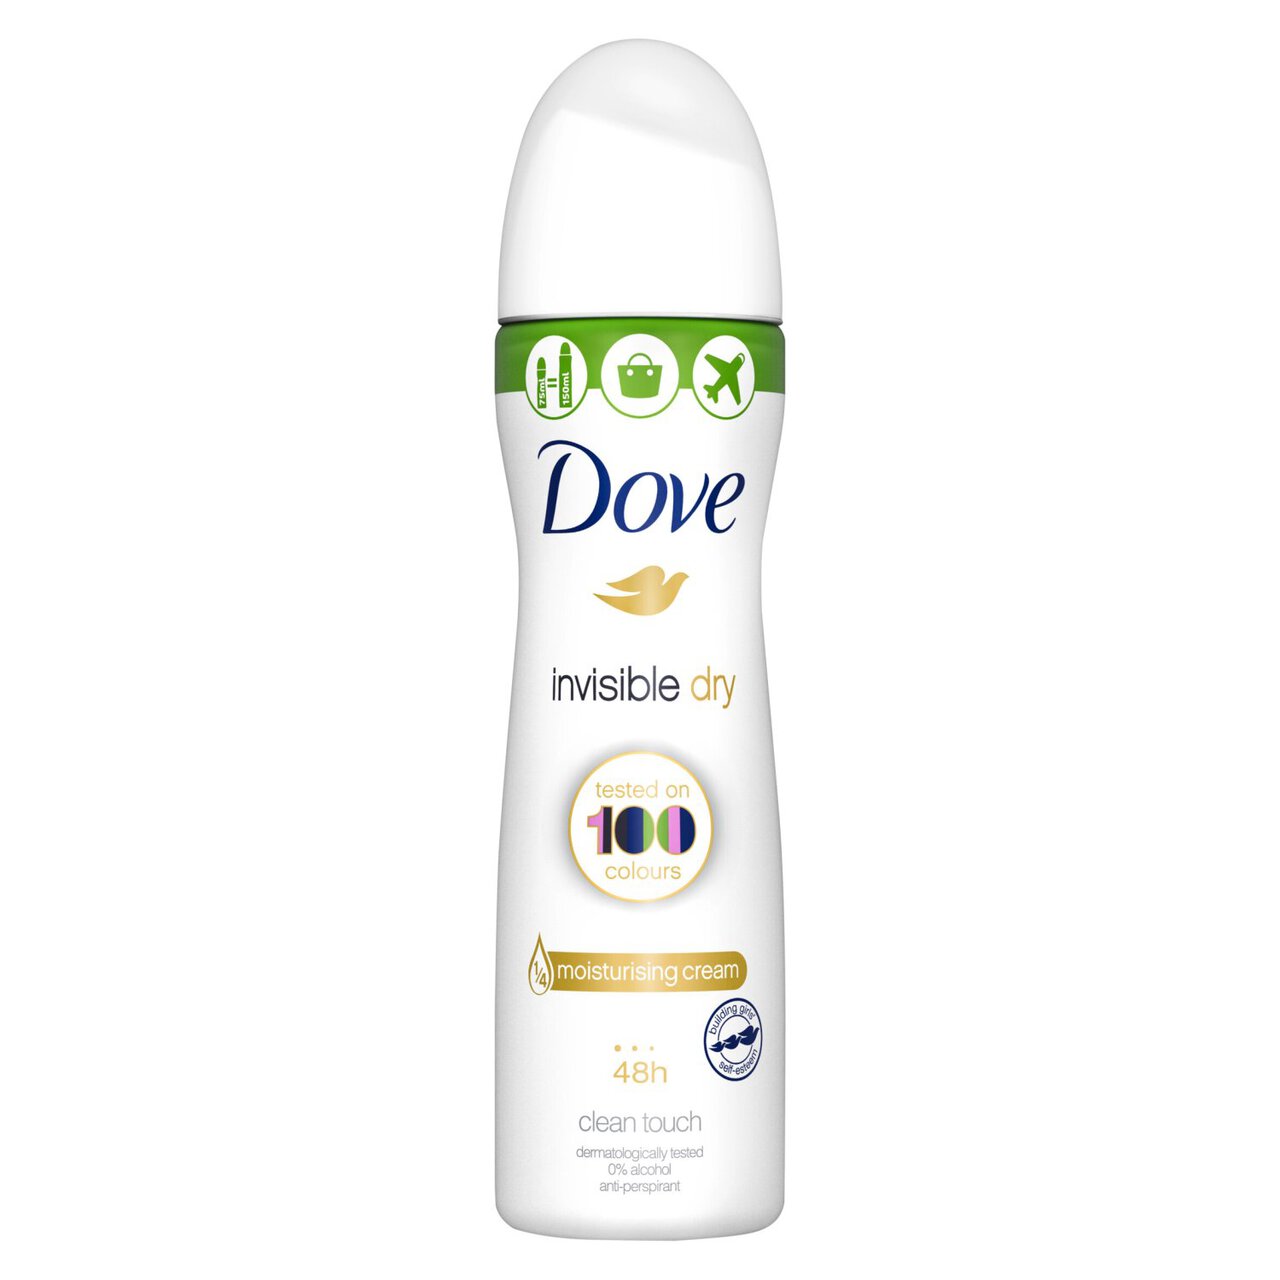 Dove Invisible Dry Spray Compressed Anti-Perspirant Deodorant 75ml